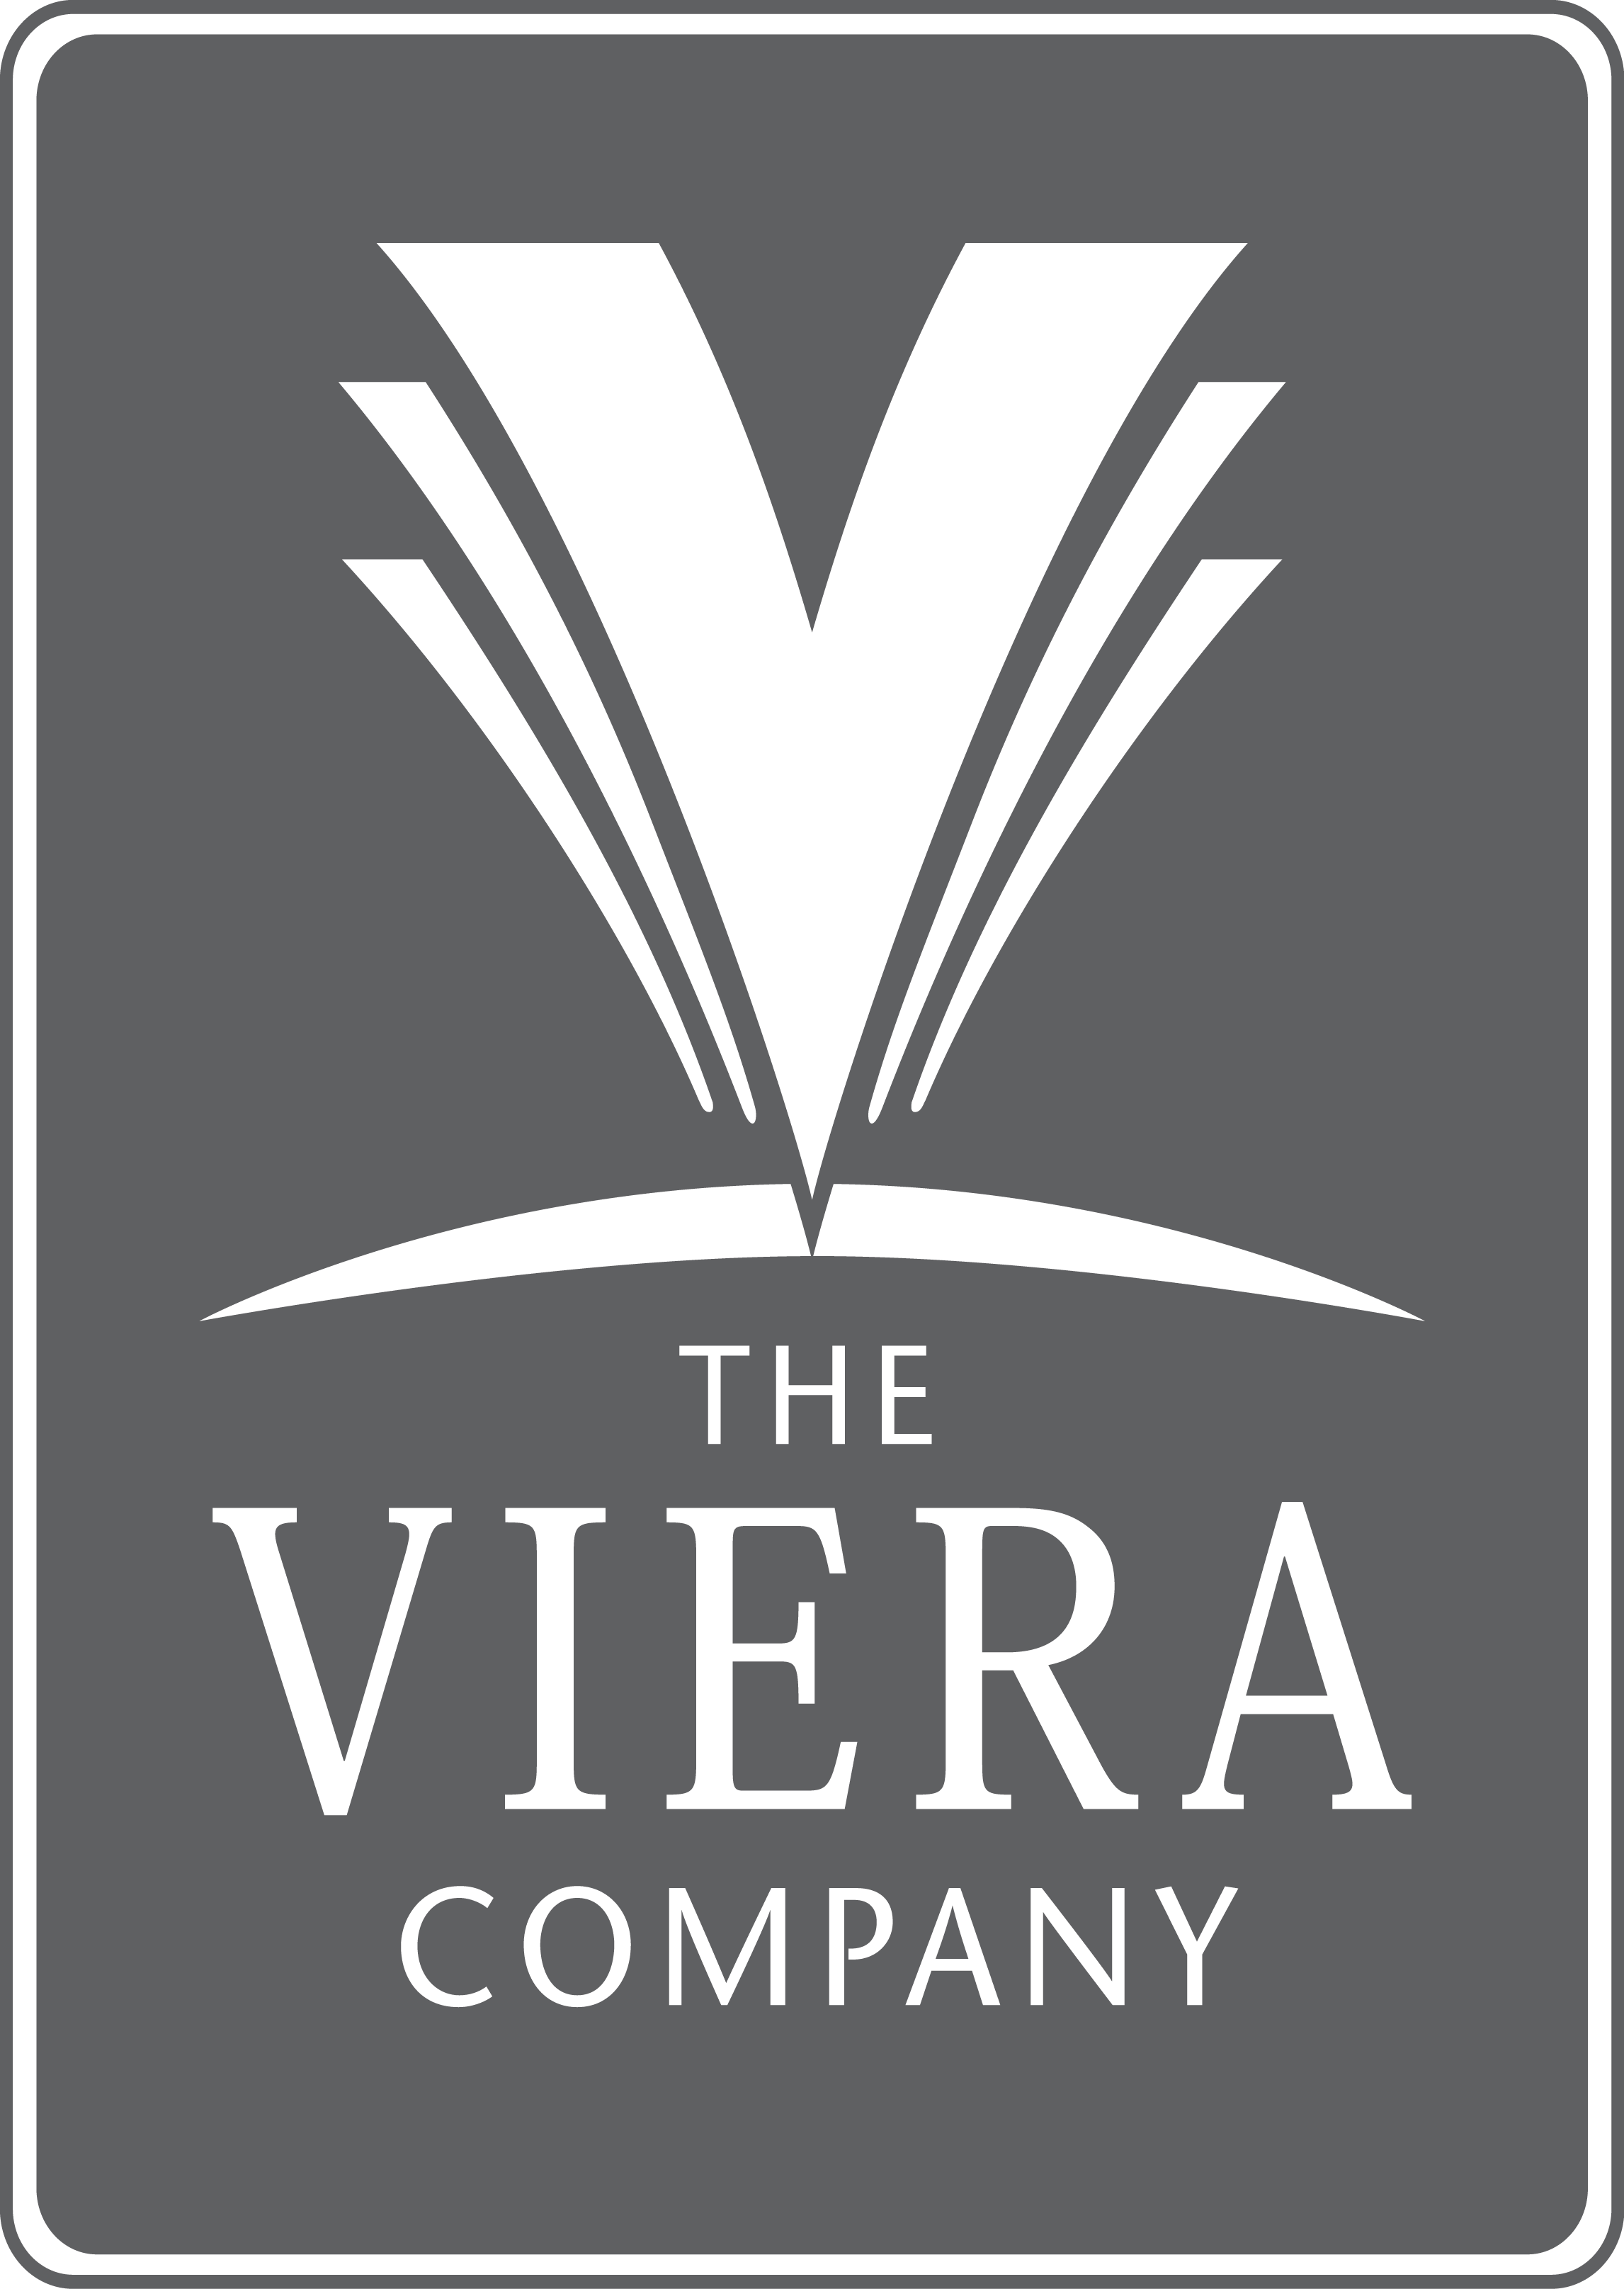 Viera Company, The